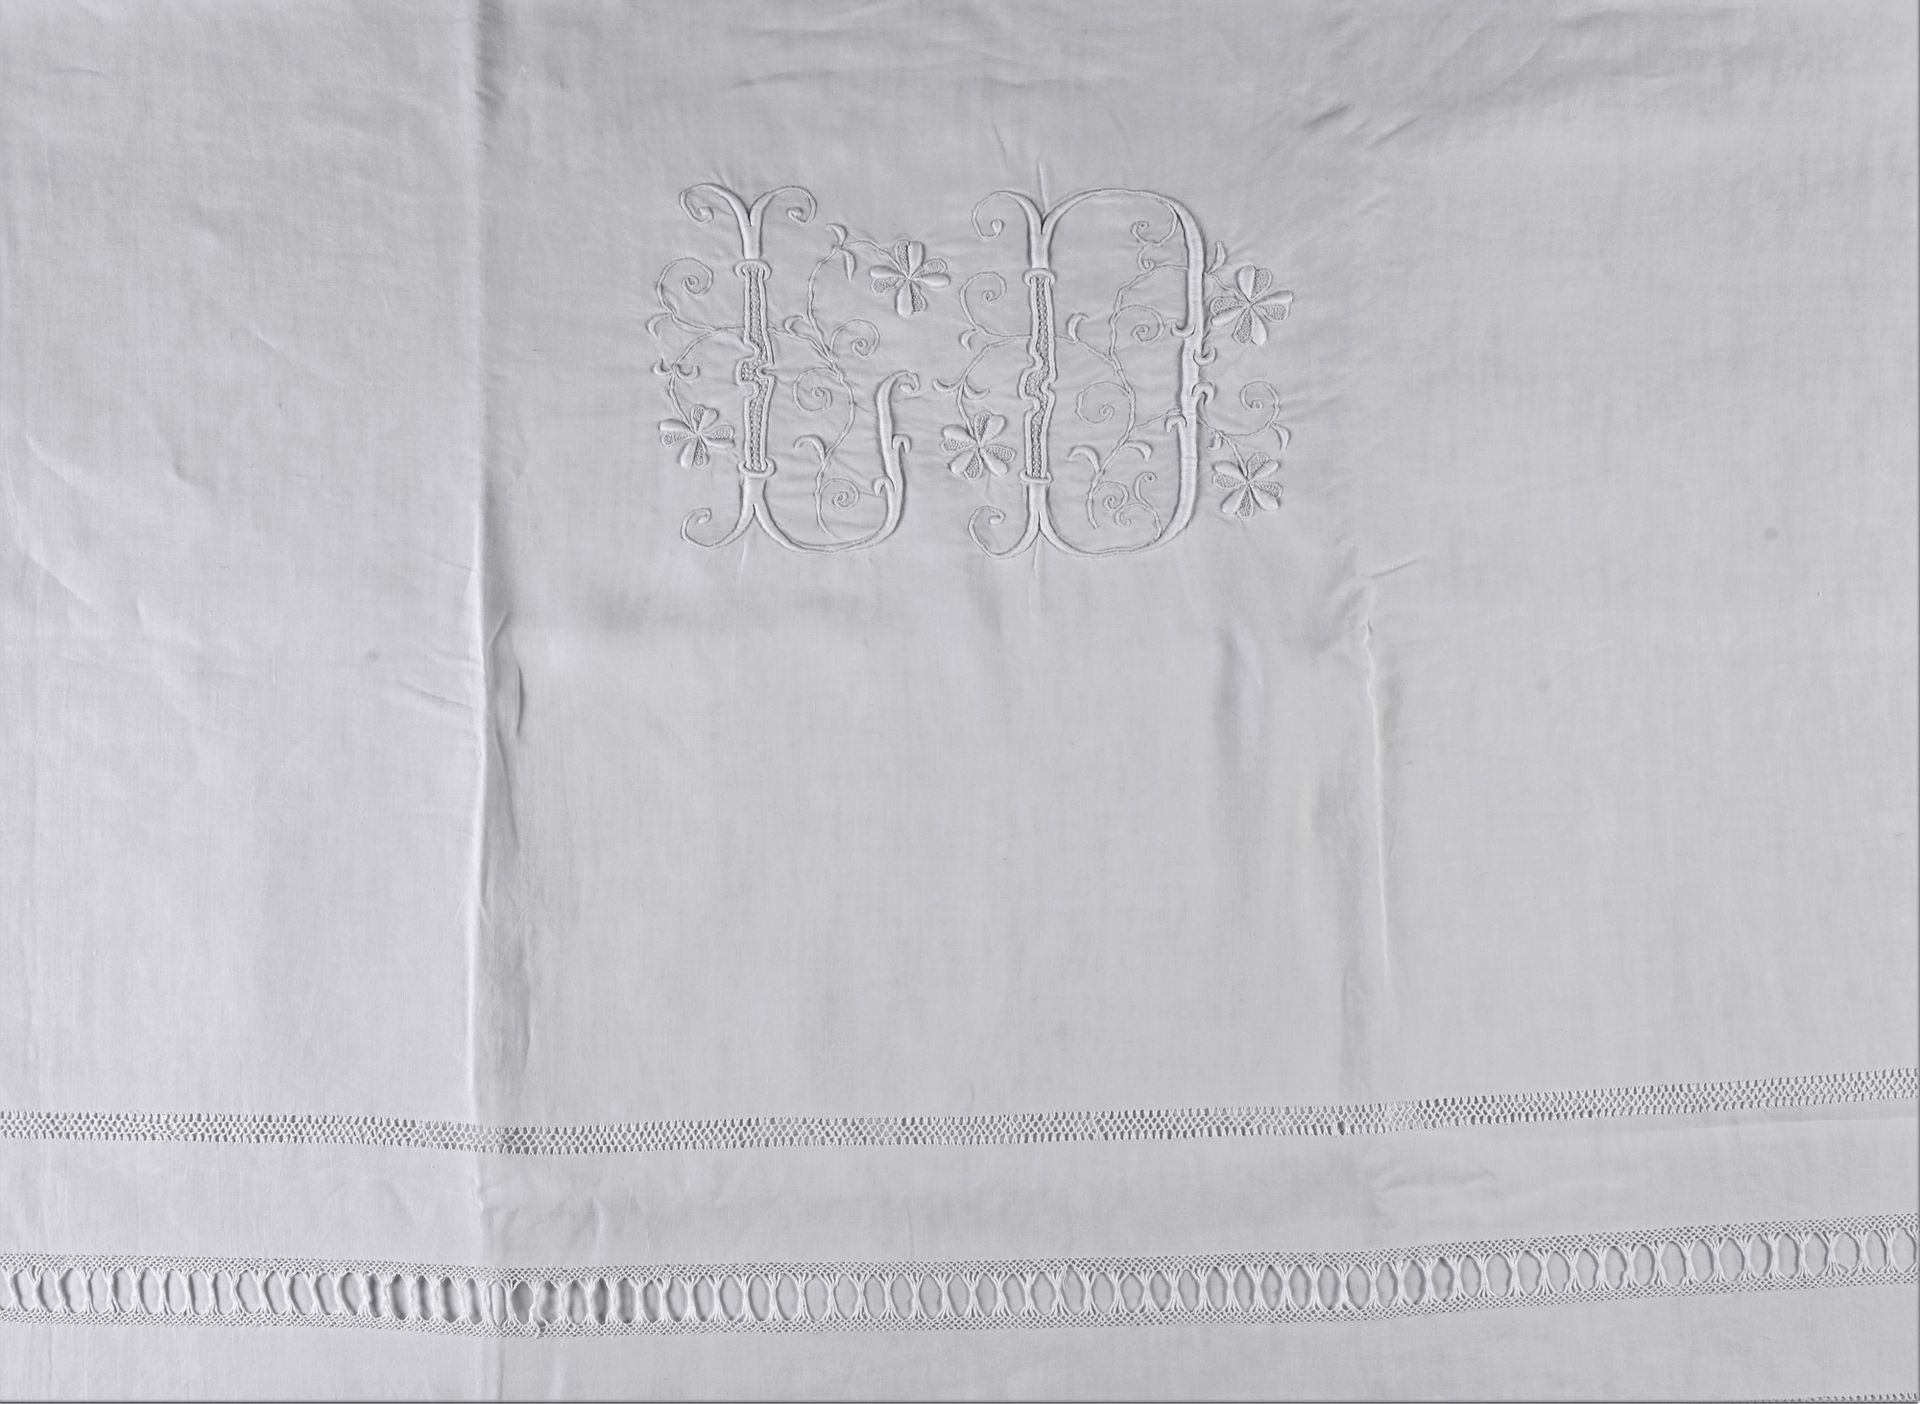 Null 亚麻床单，日子和刺绣，20世纪上半叶。
一个天的河流和大的单字LD，用白色和浮雕的方式绣着四叶草的花环（状况良好）Dim: 230 x 356 cm